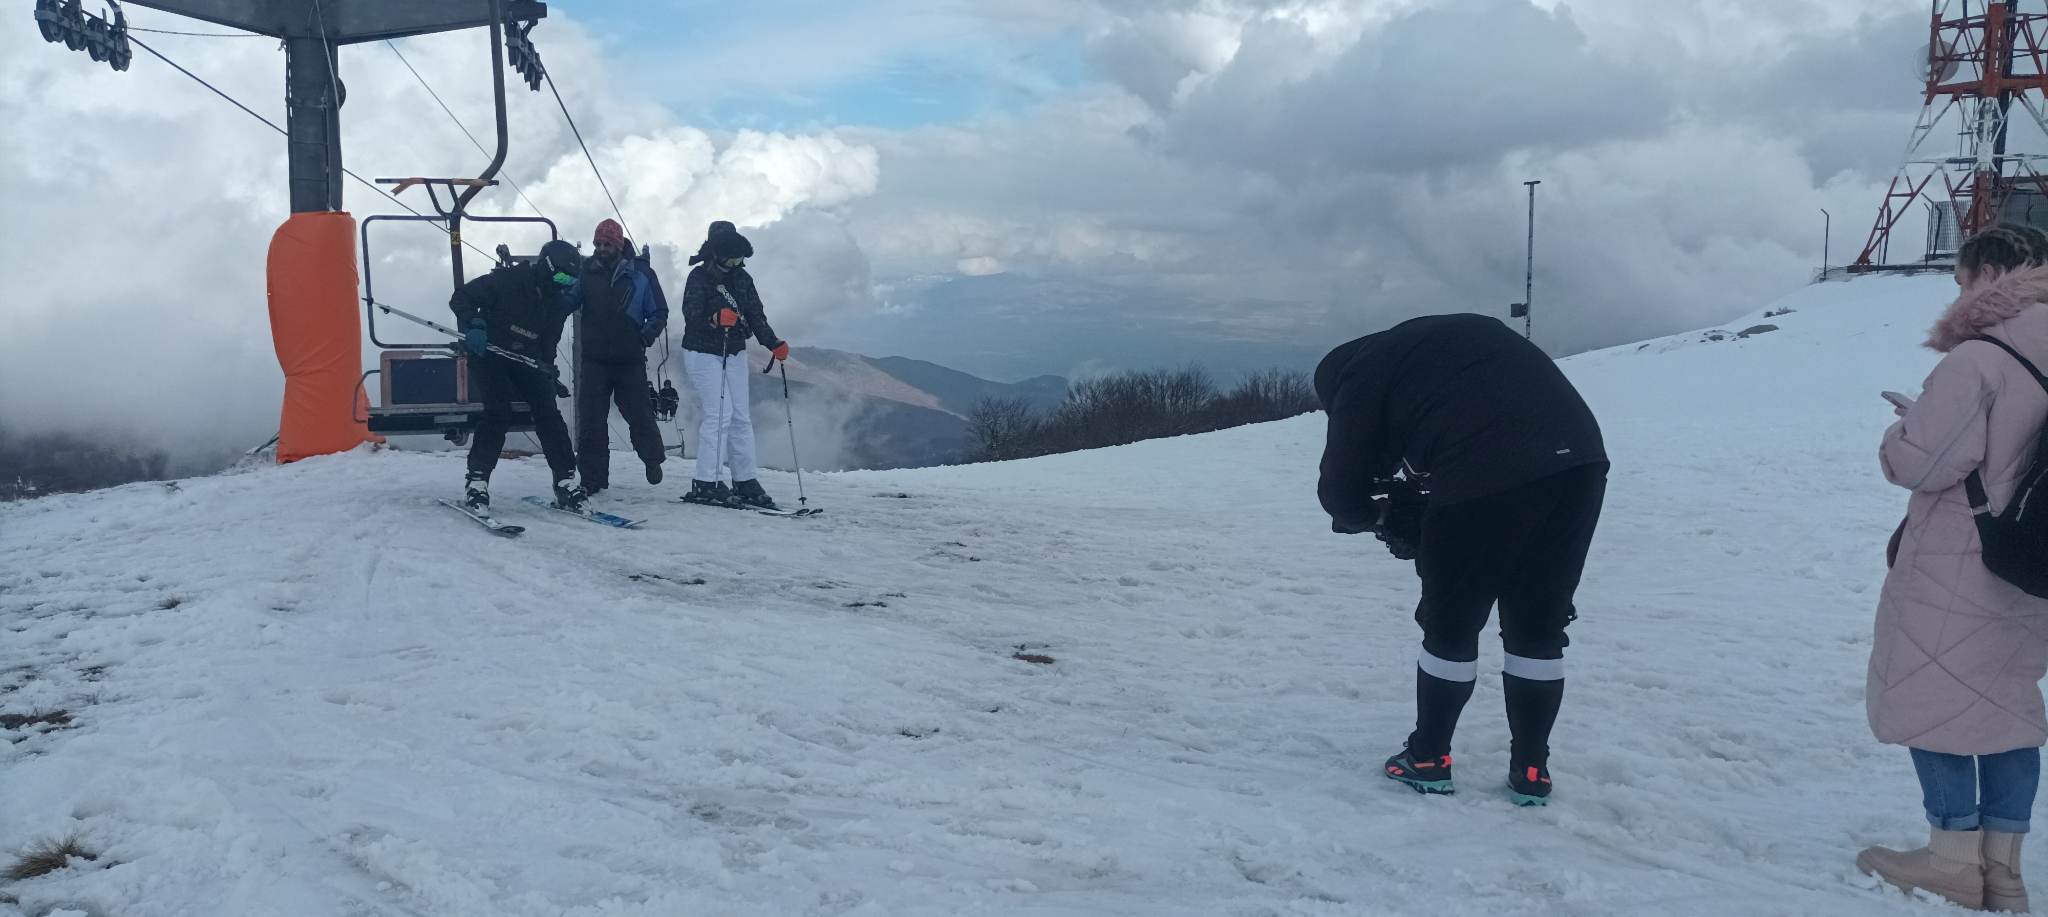 Tαξίδι εξοικείωσης για την προβολή των χειμερινών προορισμών στο ταξιδιωτικό κοινό της Ρουμανίας